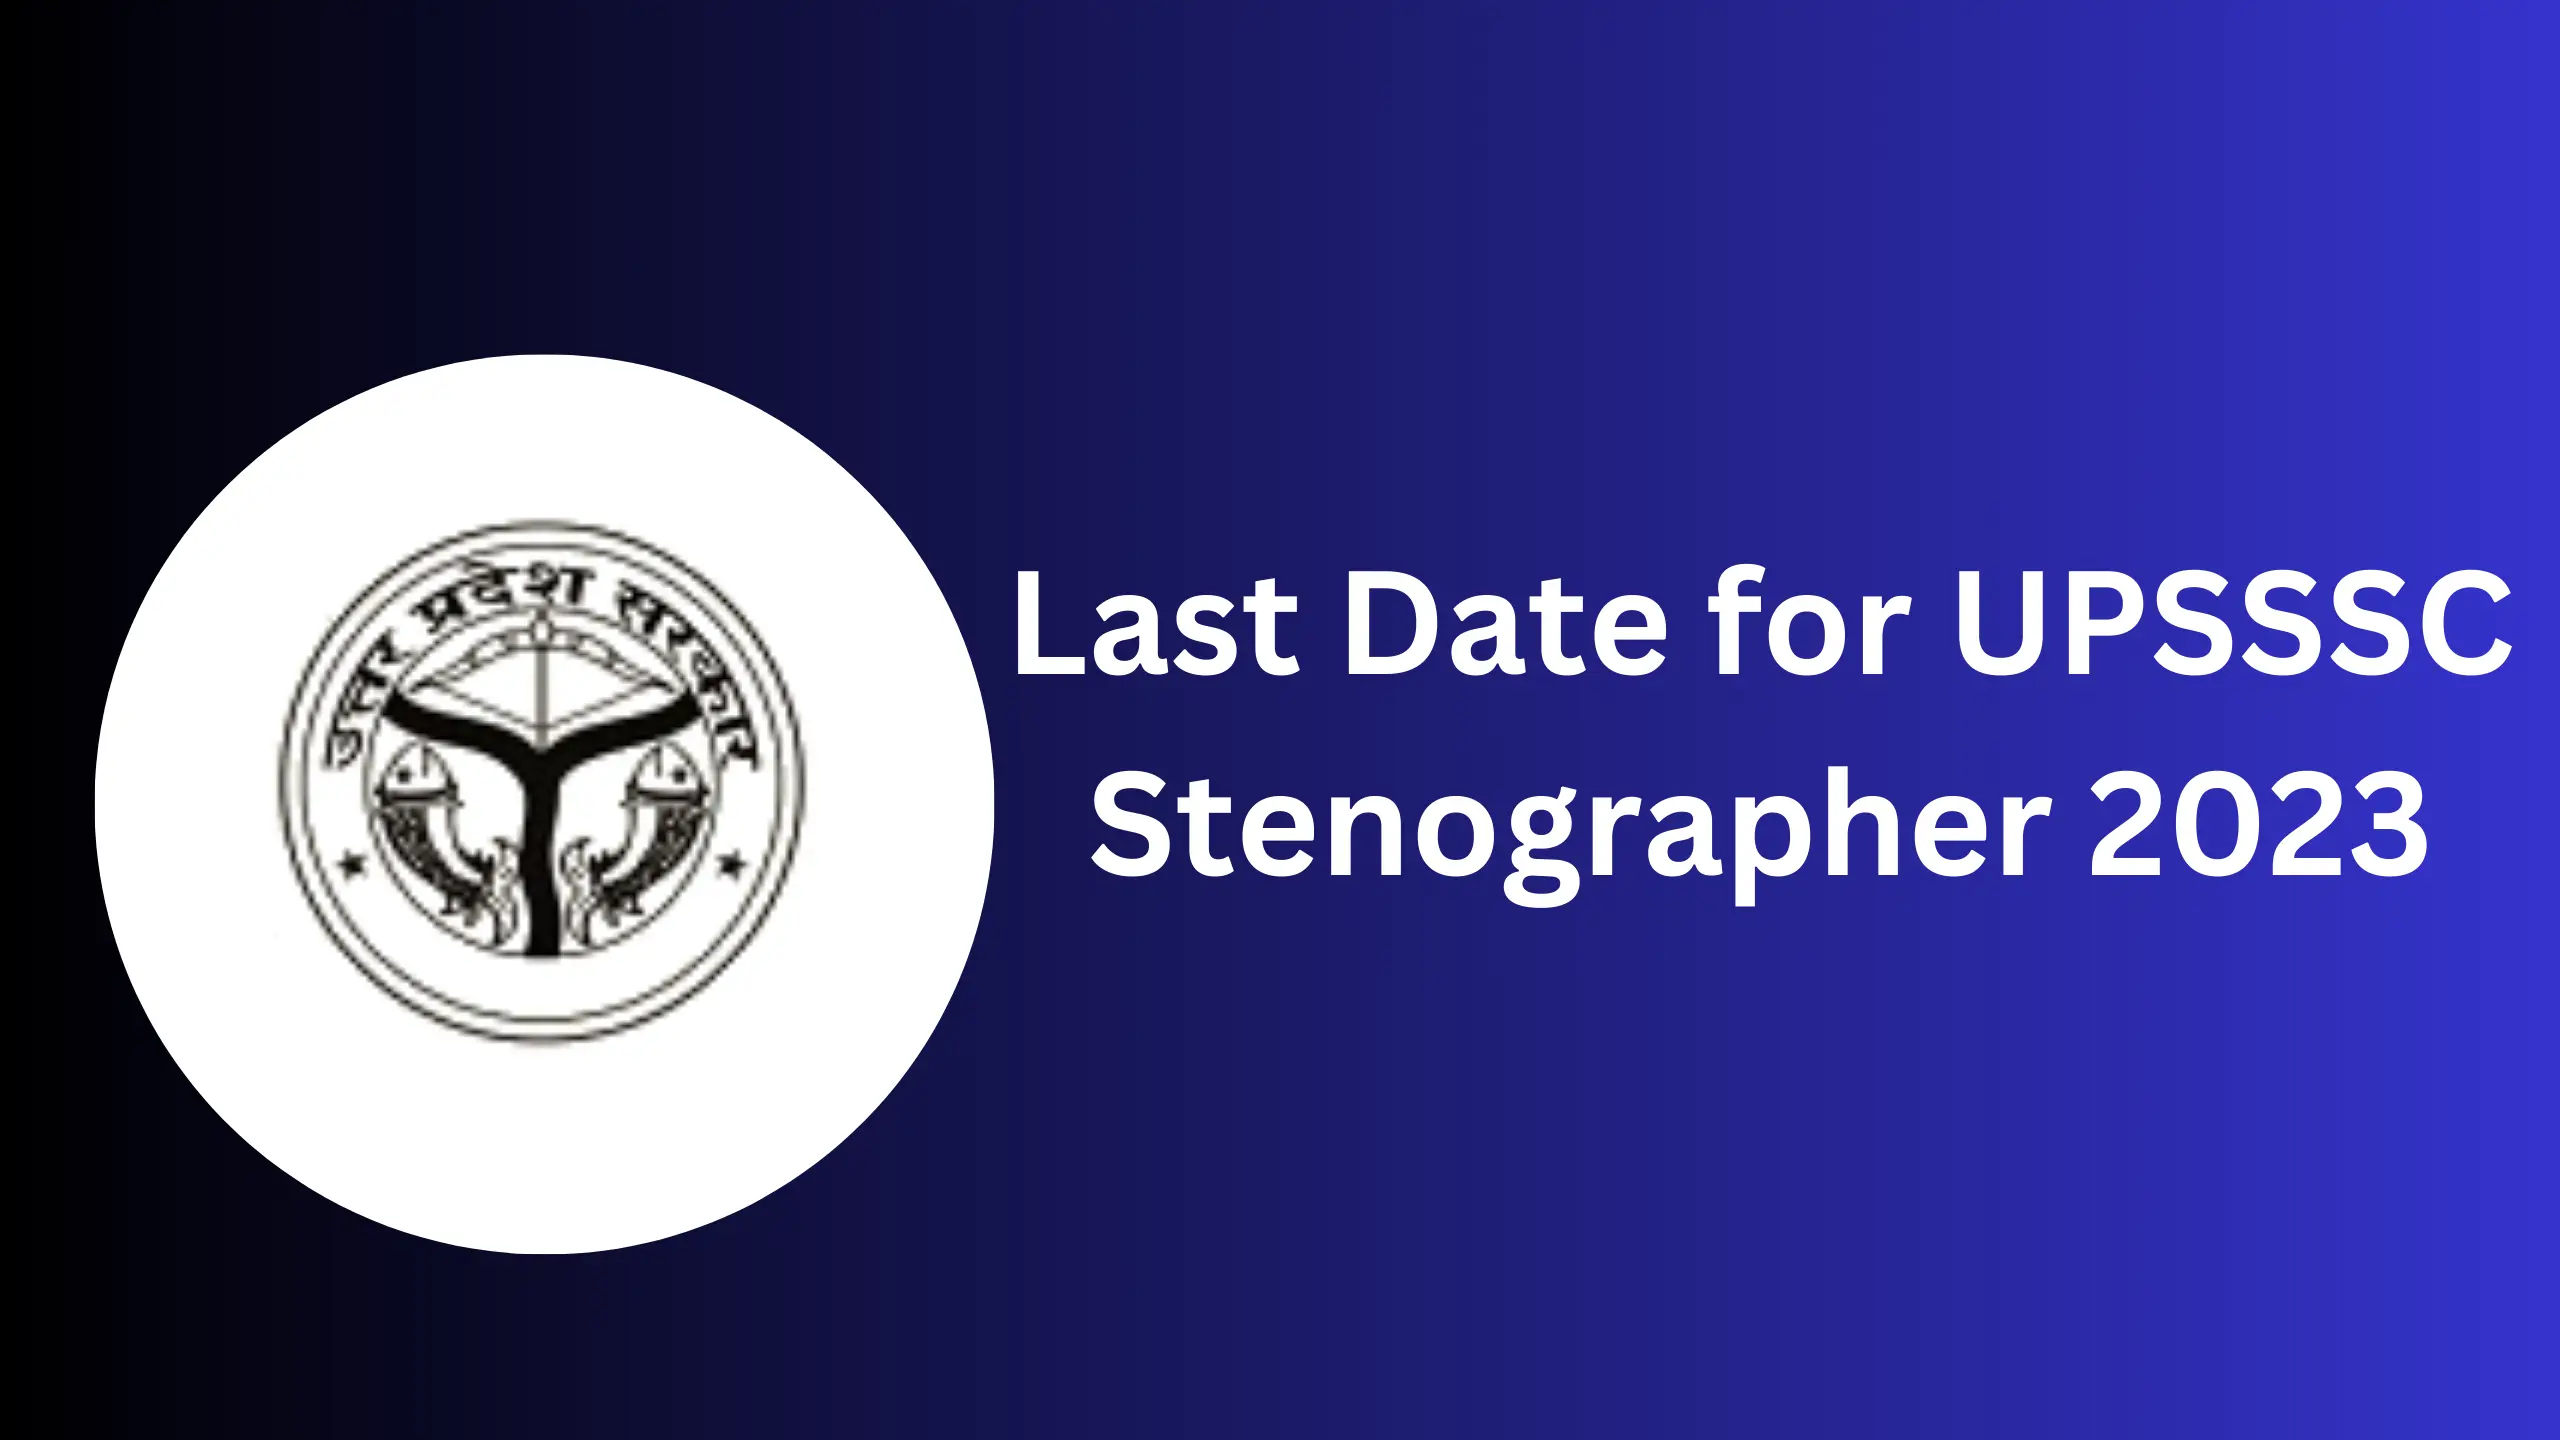 Last Date for UPSSSC Stenographer 2023